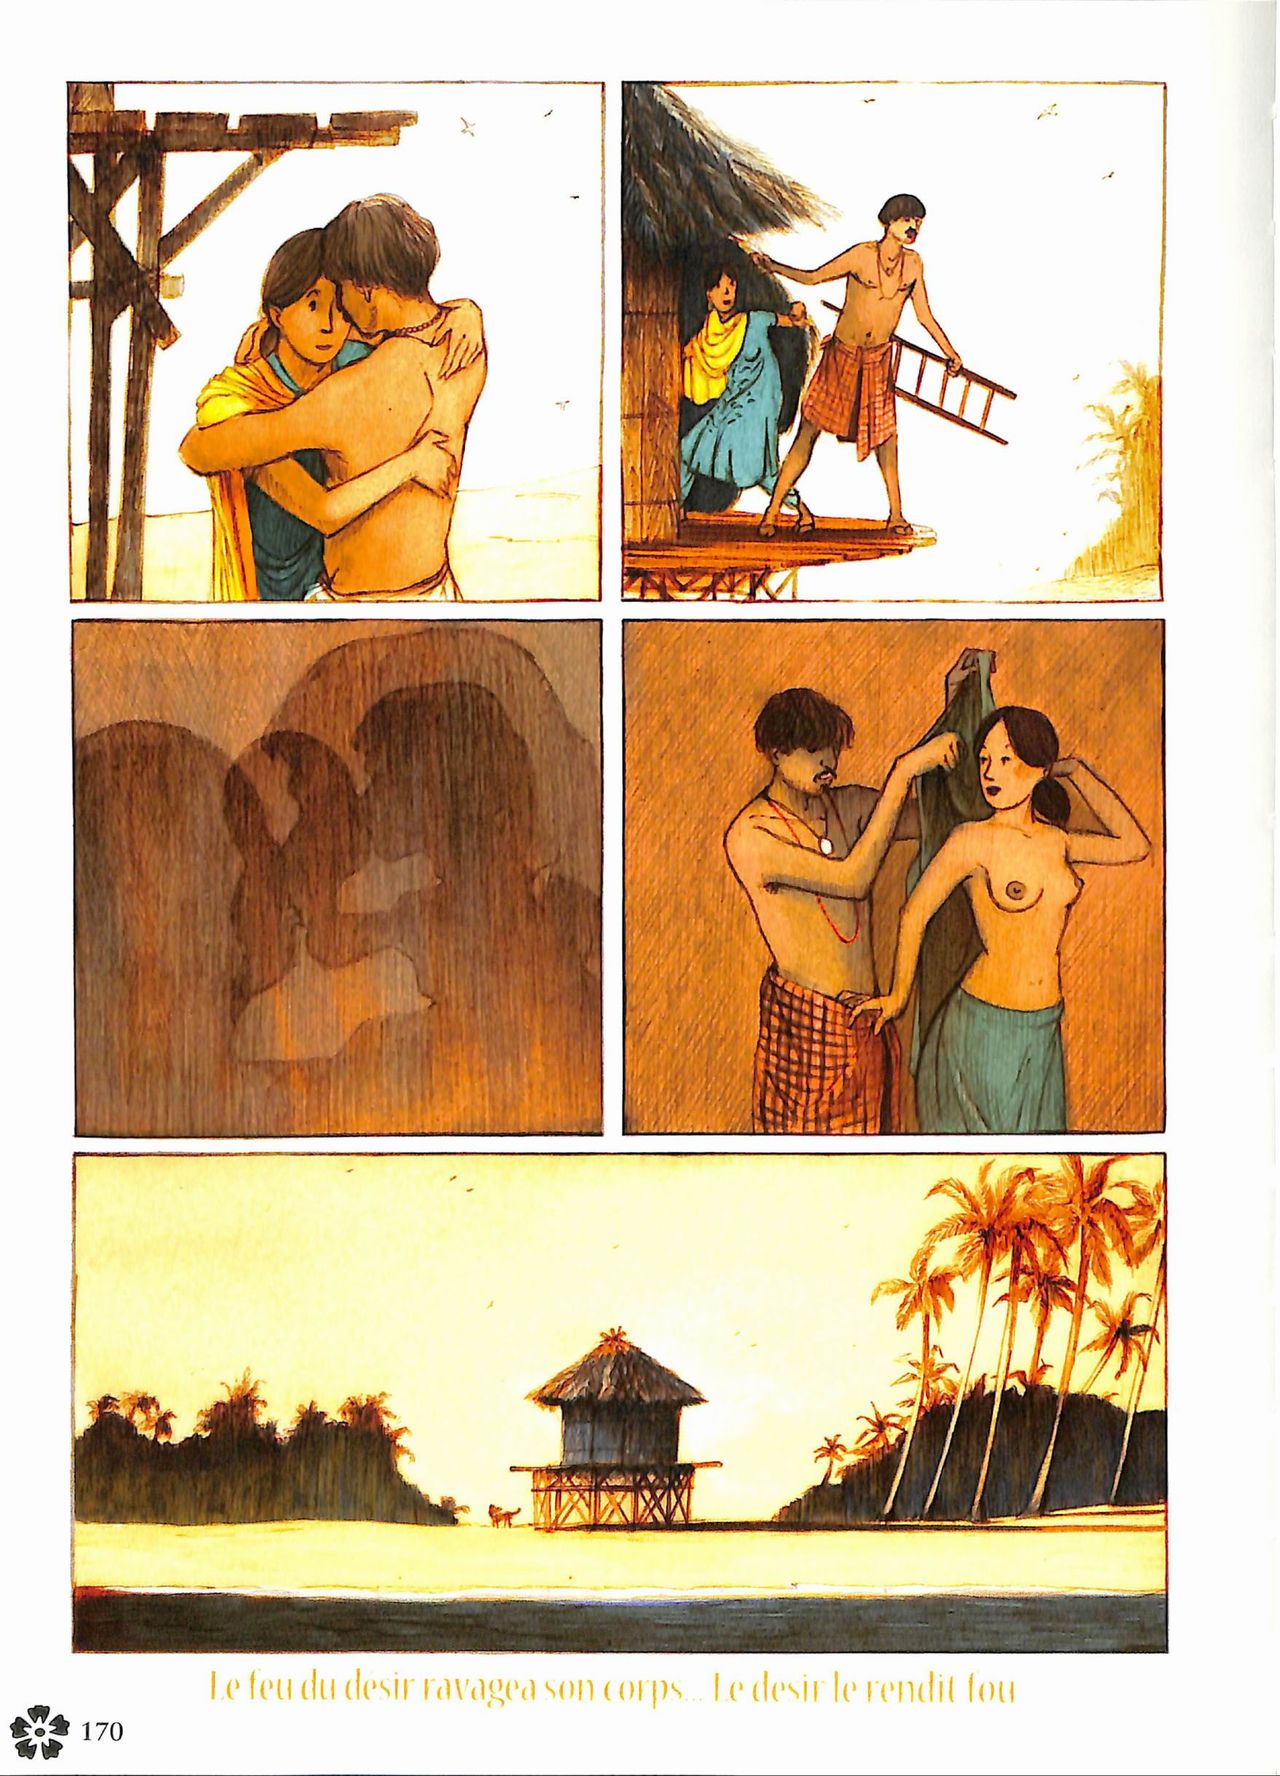 Kama Sutra en bandes dessinées - Kama Sutra with Comics numero d'image 170